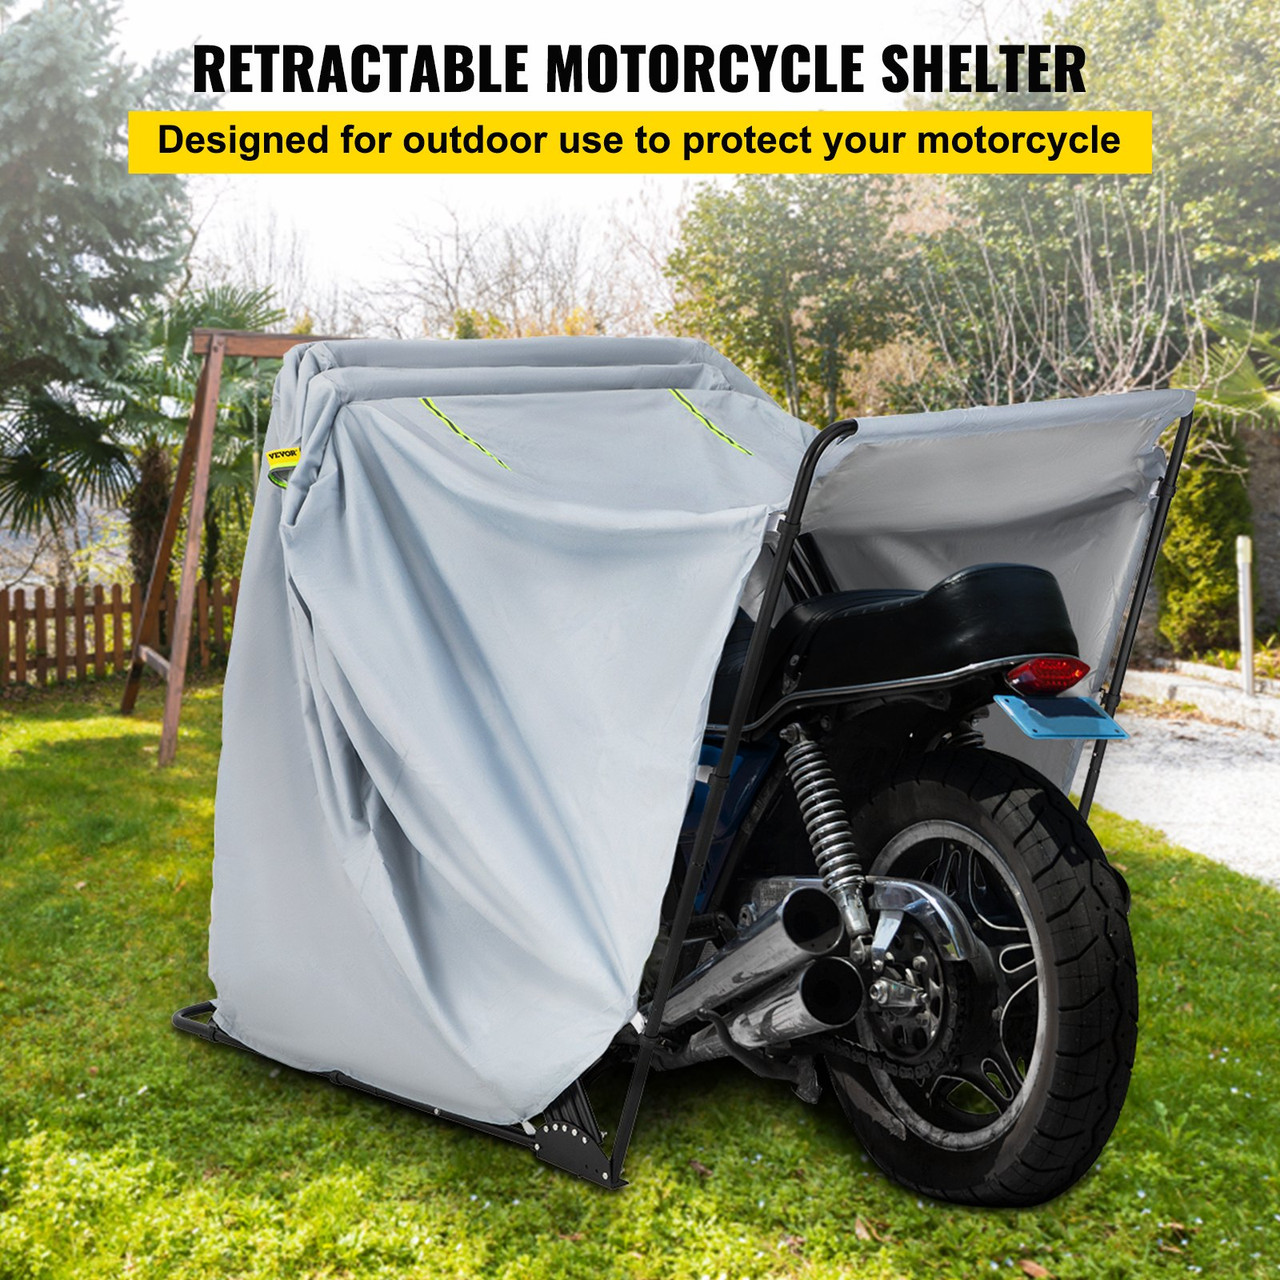 The Bike Shield - Motorcycle Shelter / Garage / Shed / Storage